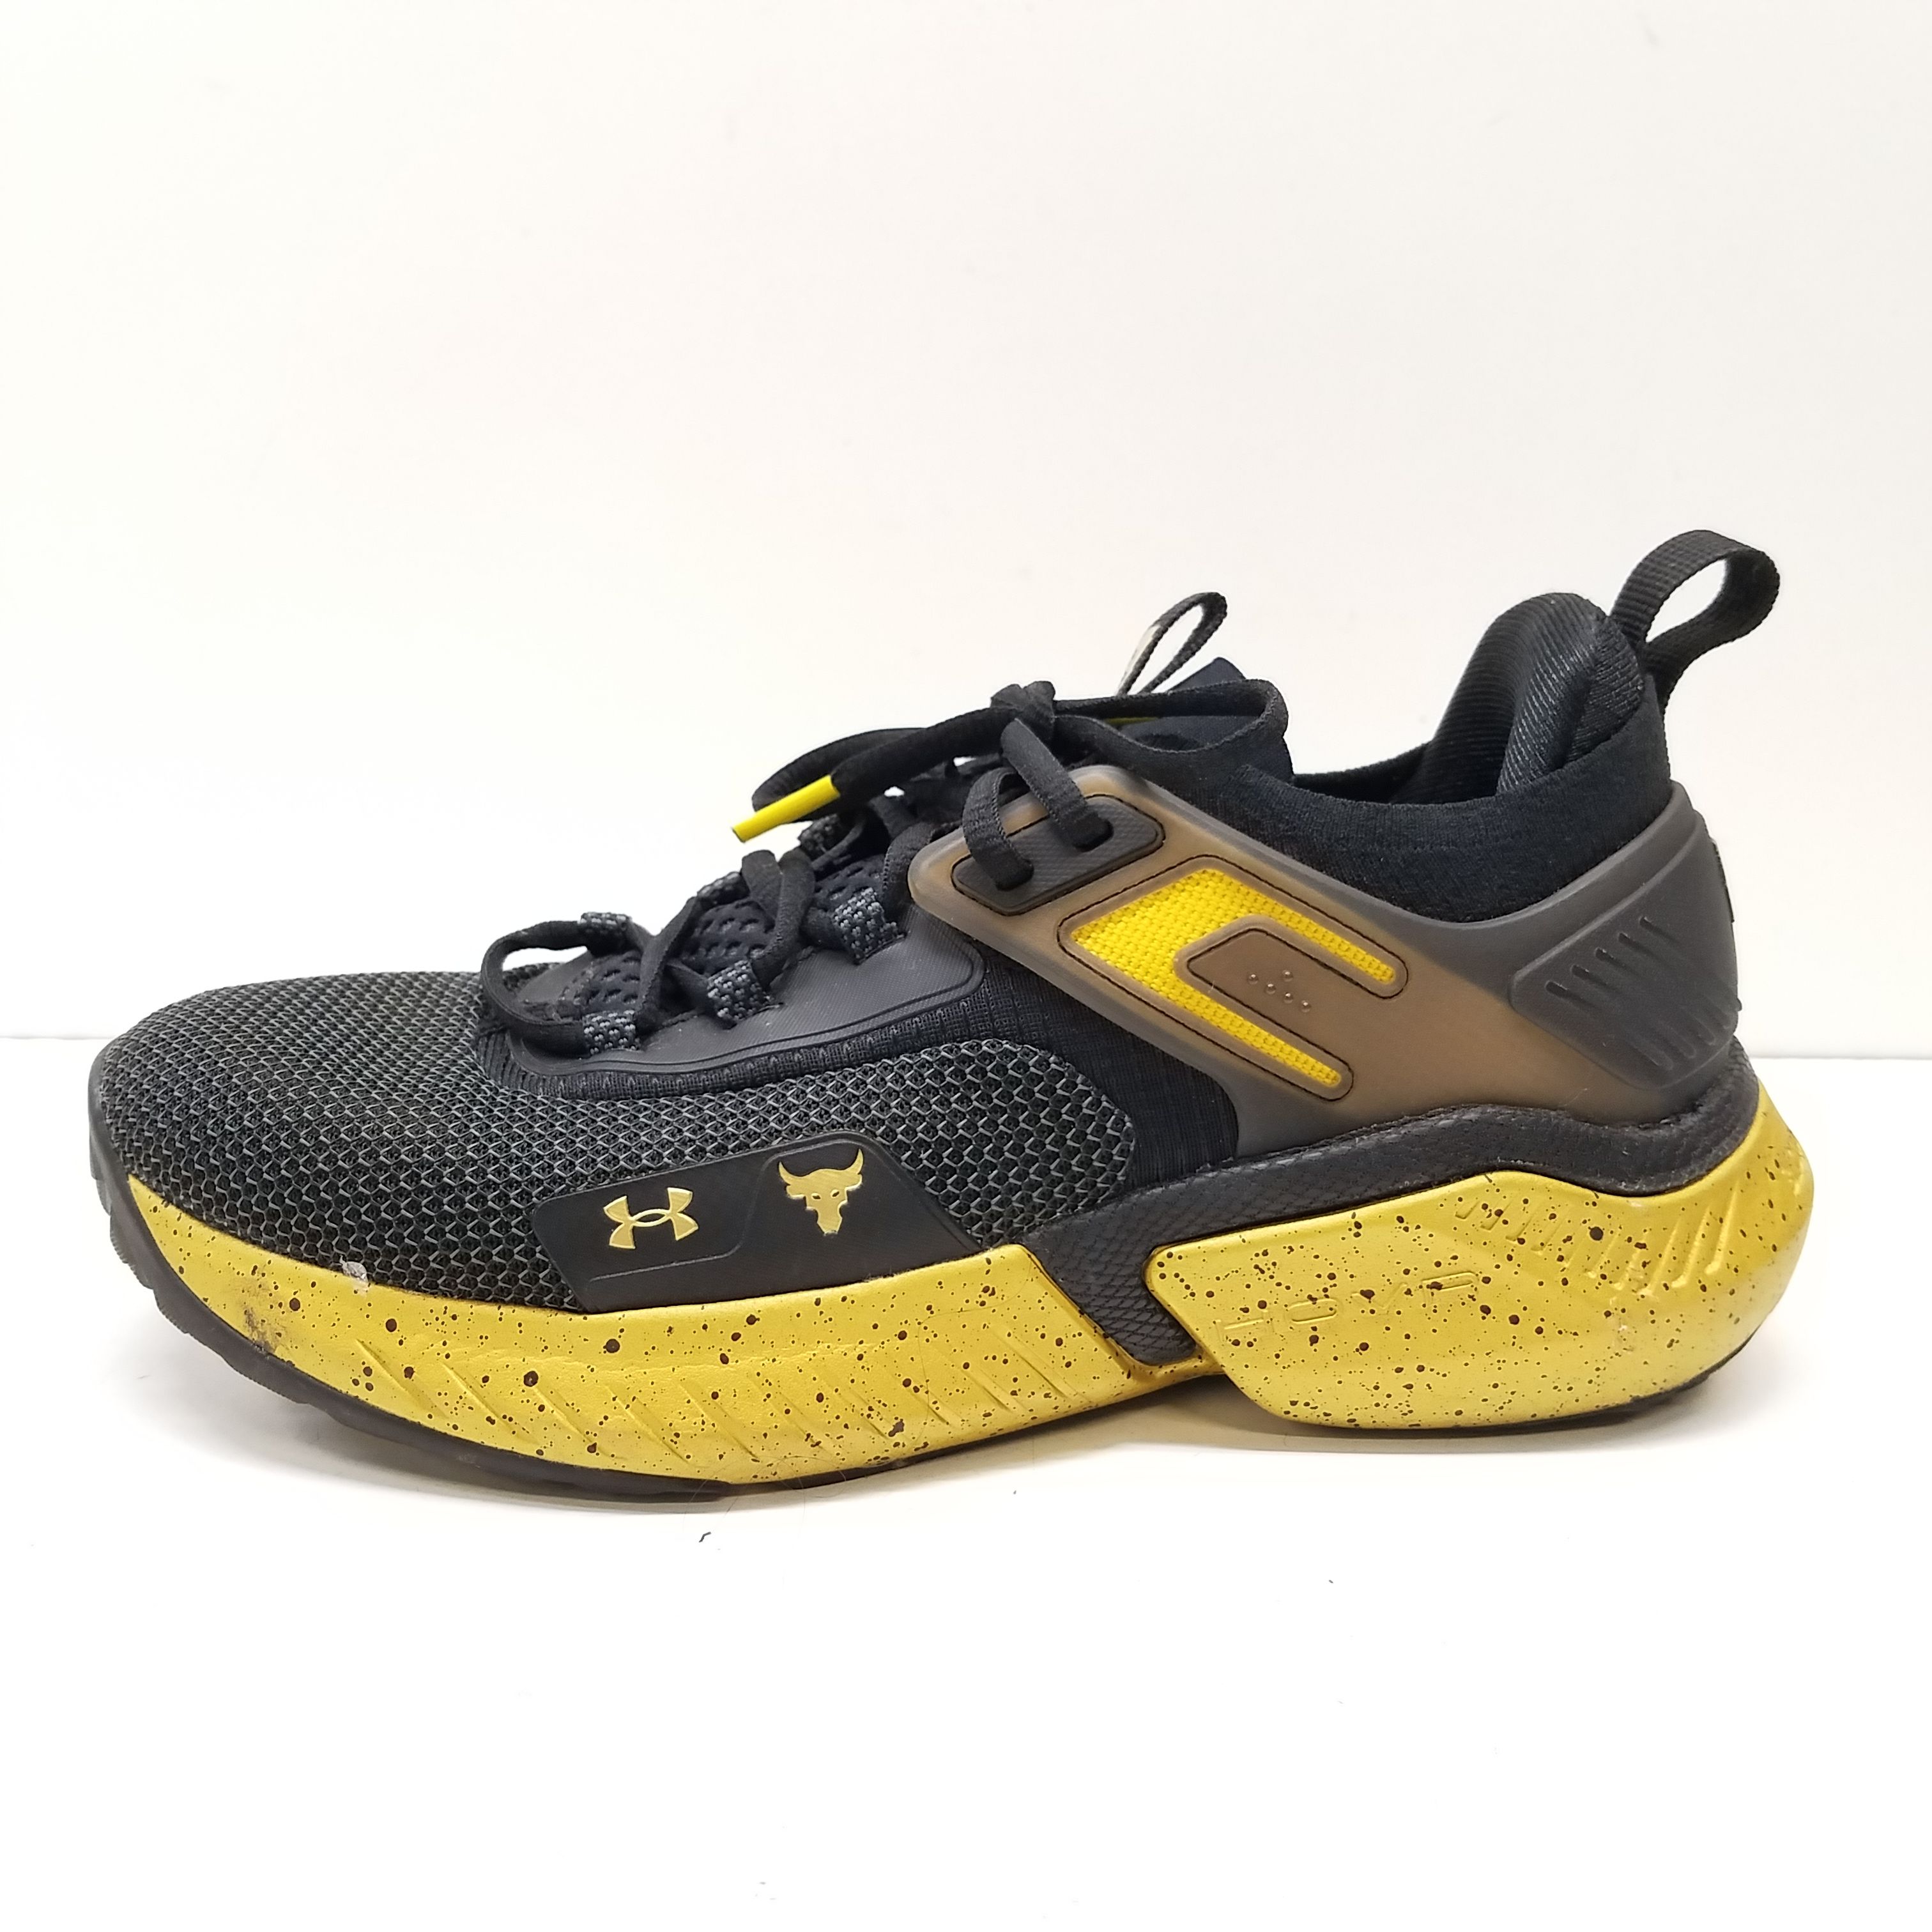 Underarmour delta rock Black gold Men''s Shoes at Rs 2899/pair